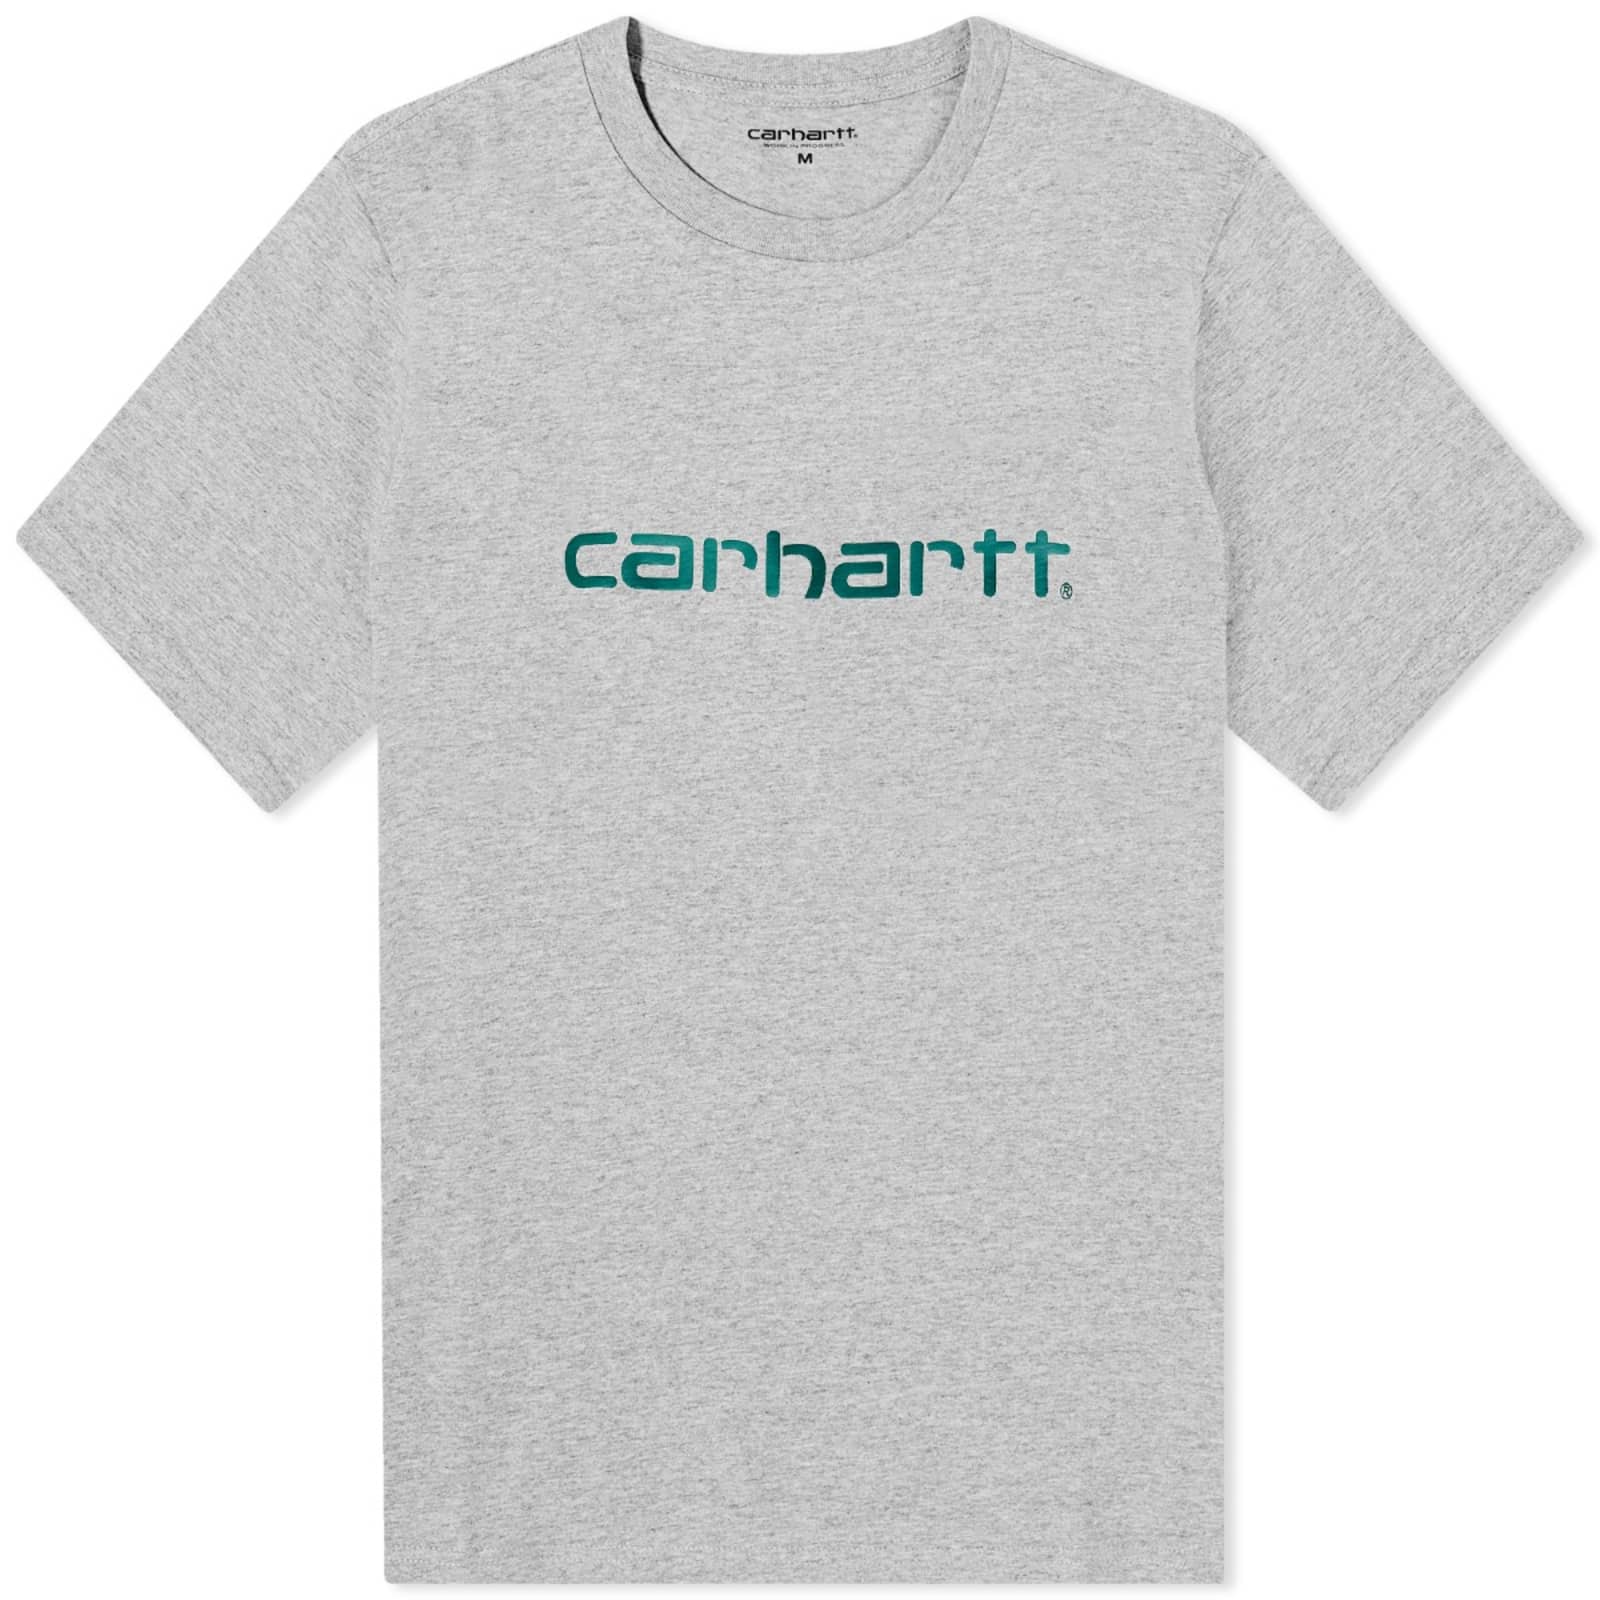 Футболка Carhartt Wip Script, серый футболка carhartt wip script светло коричневый